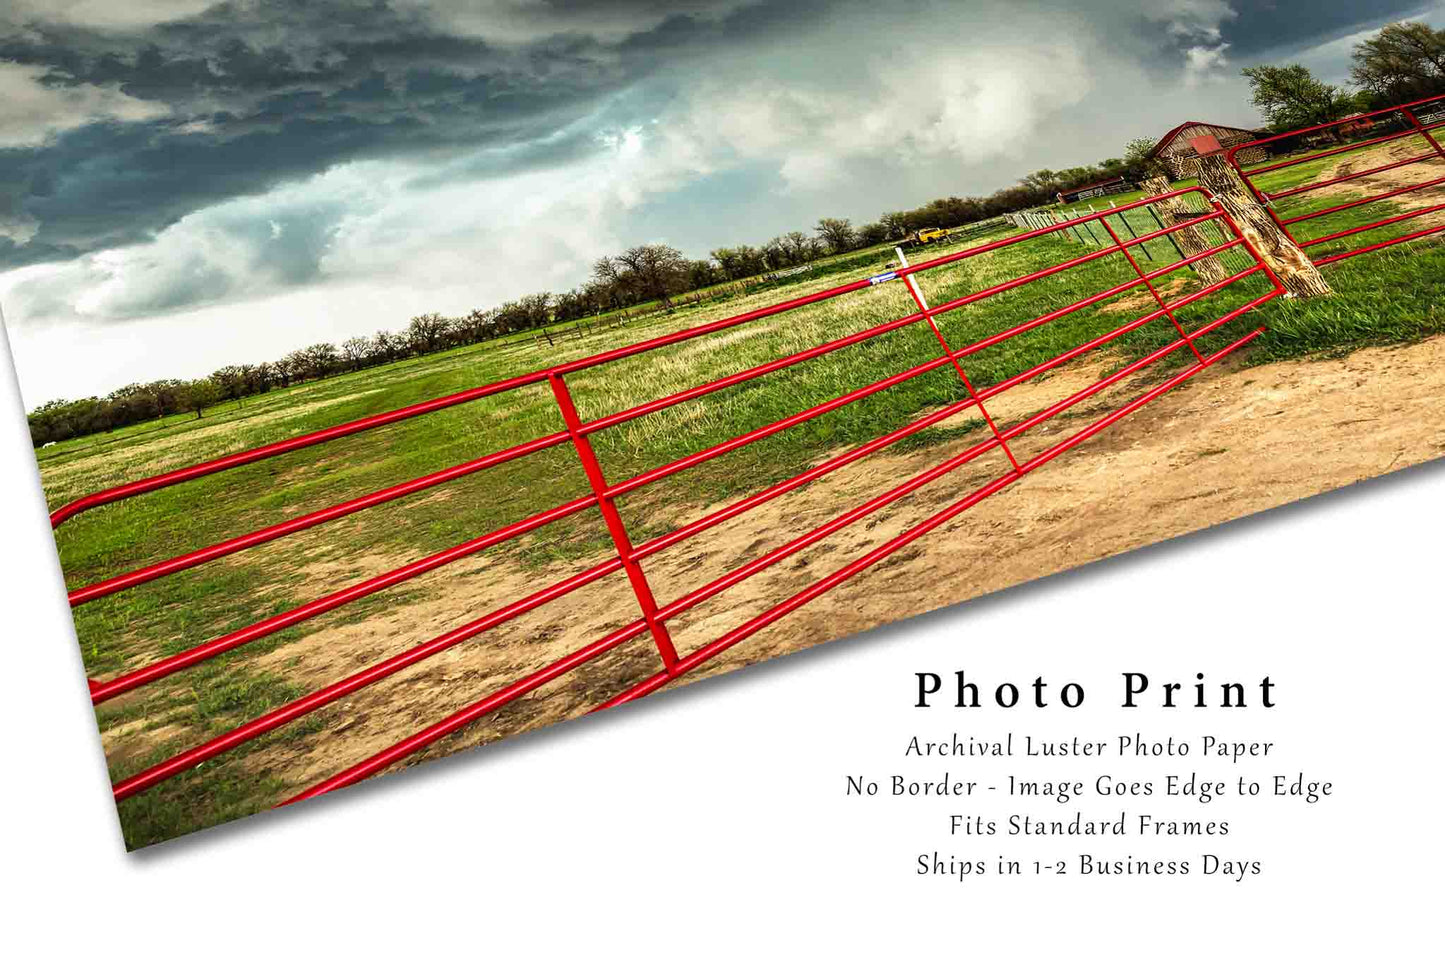 Storm Photo Print | Thunderstorm Over Farm Picture | Kansas Wall Art | Weather Photography | Great Plains Decor